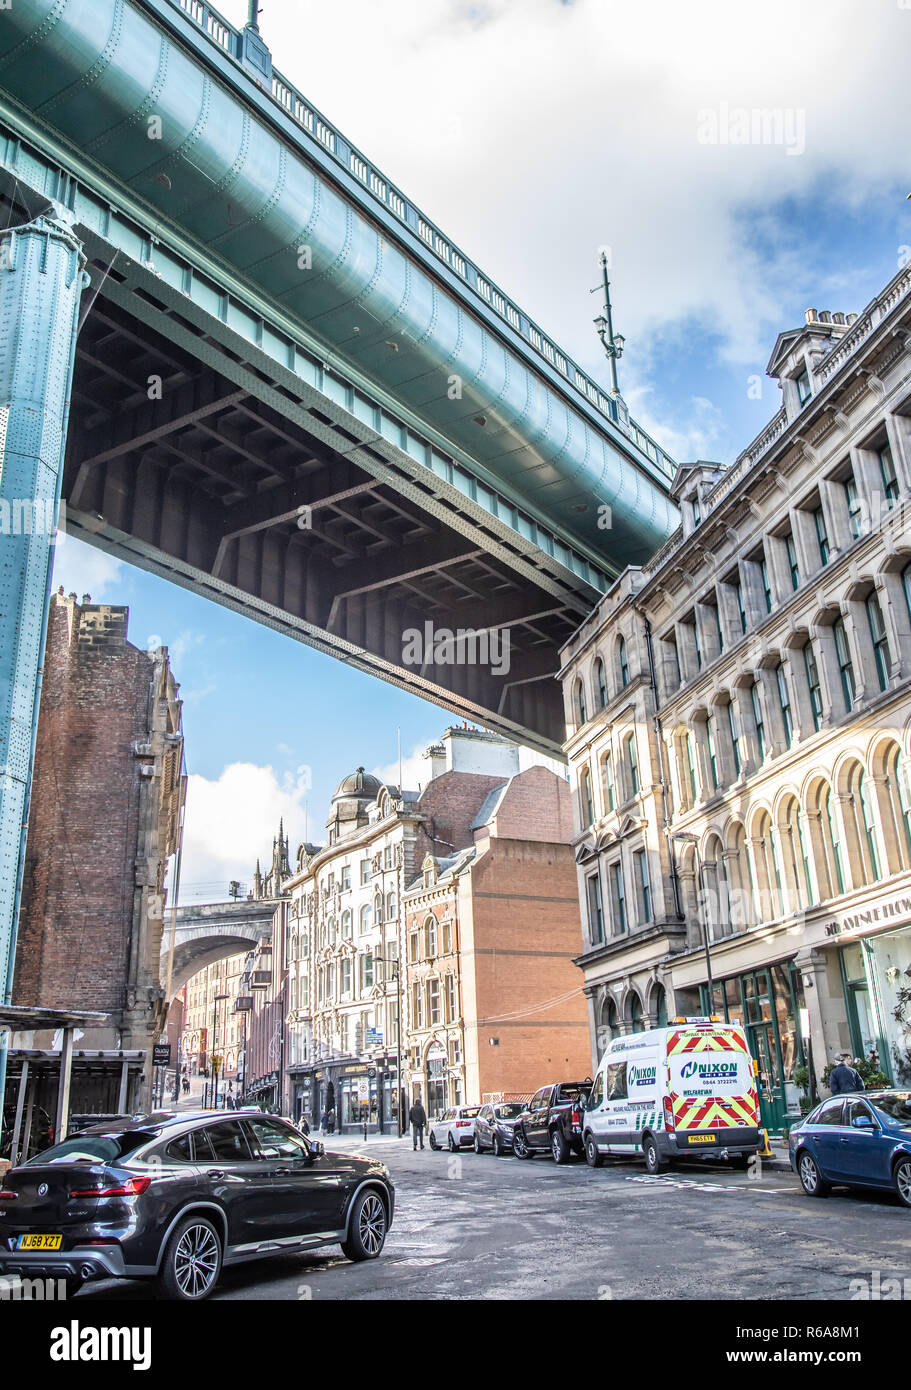 Street view of Side in Newcastle upon Tyne under the Tyne Bridge Stock Photo